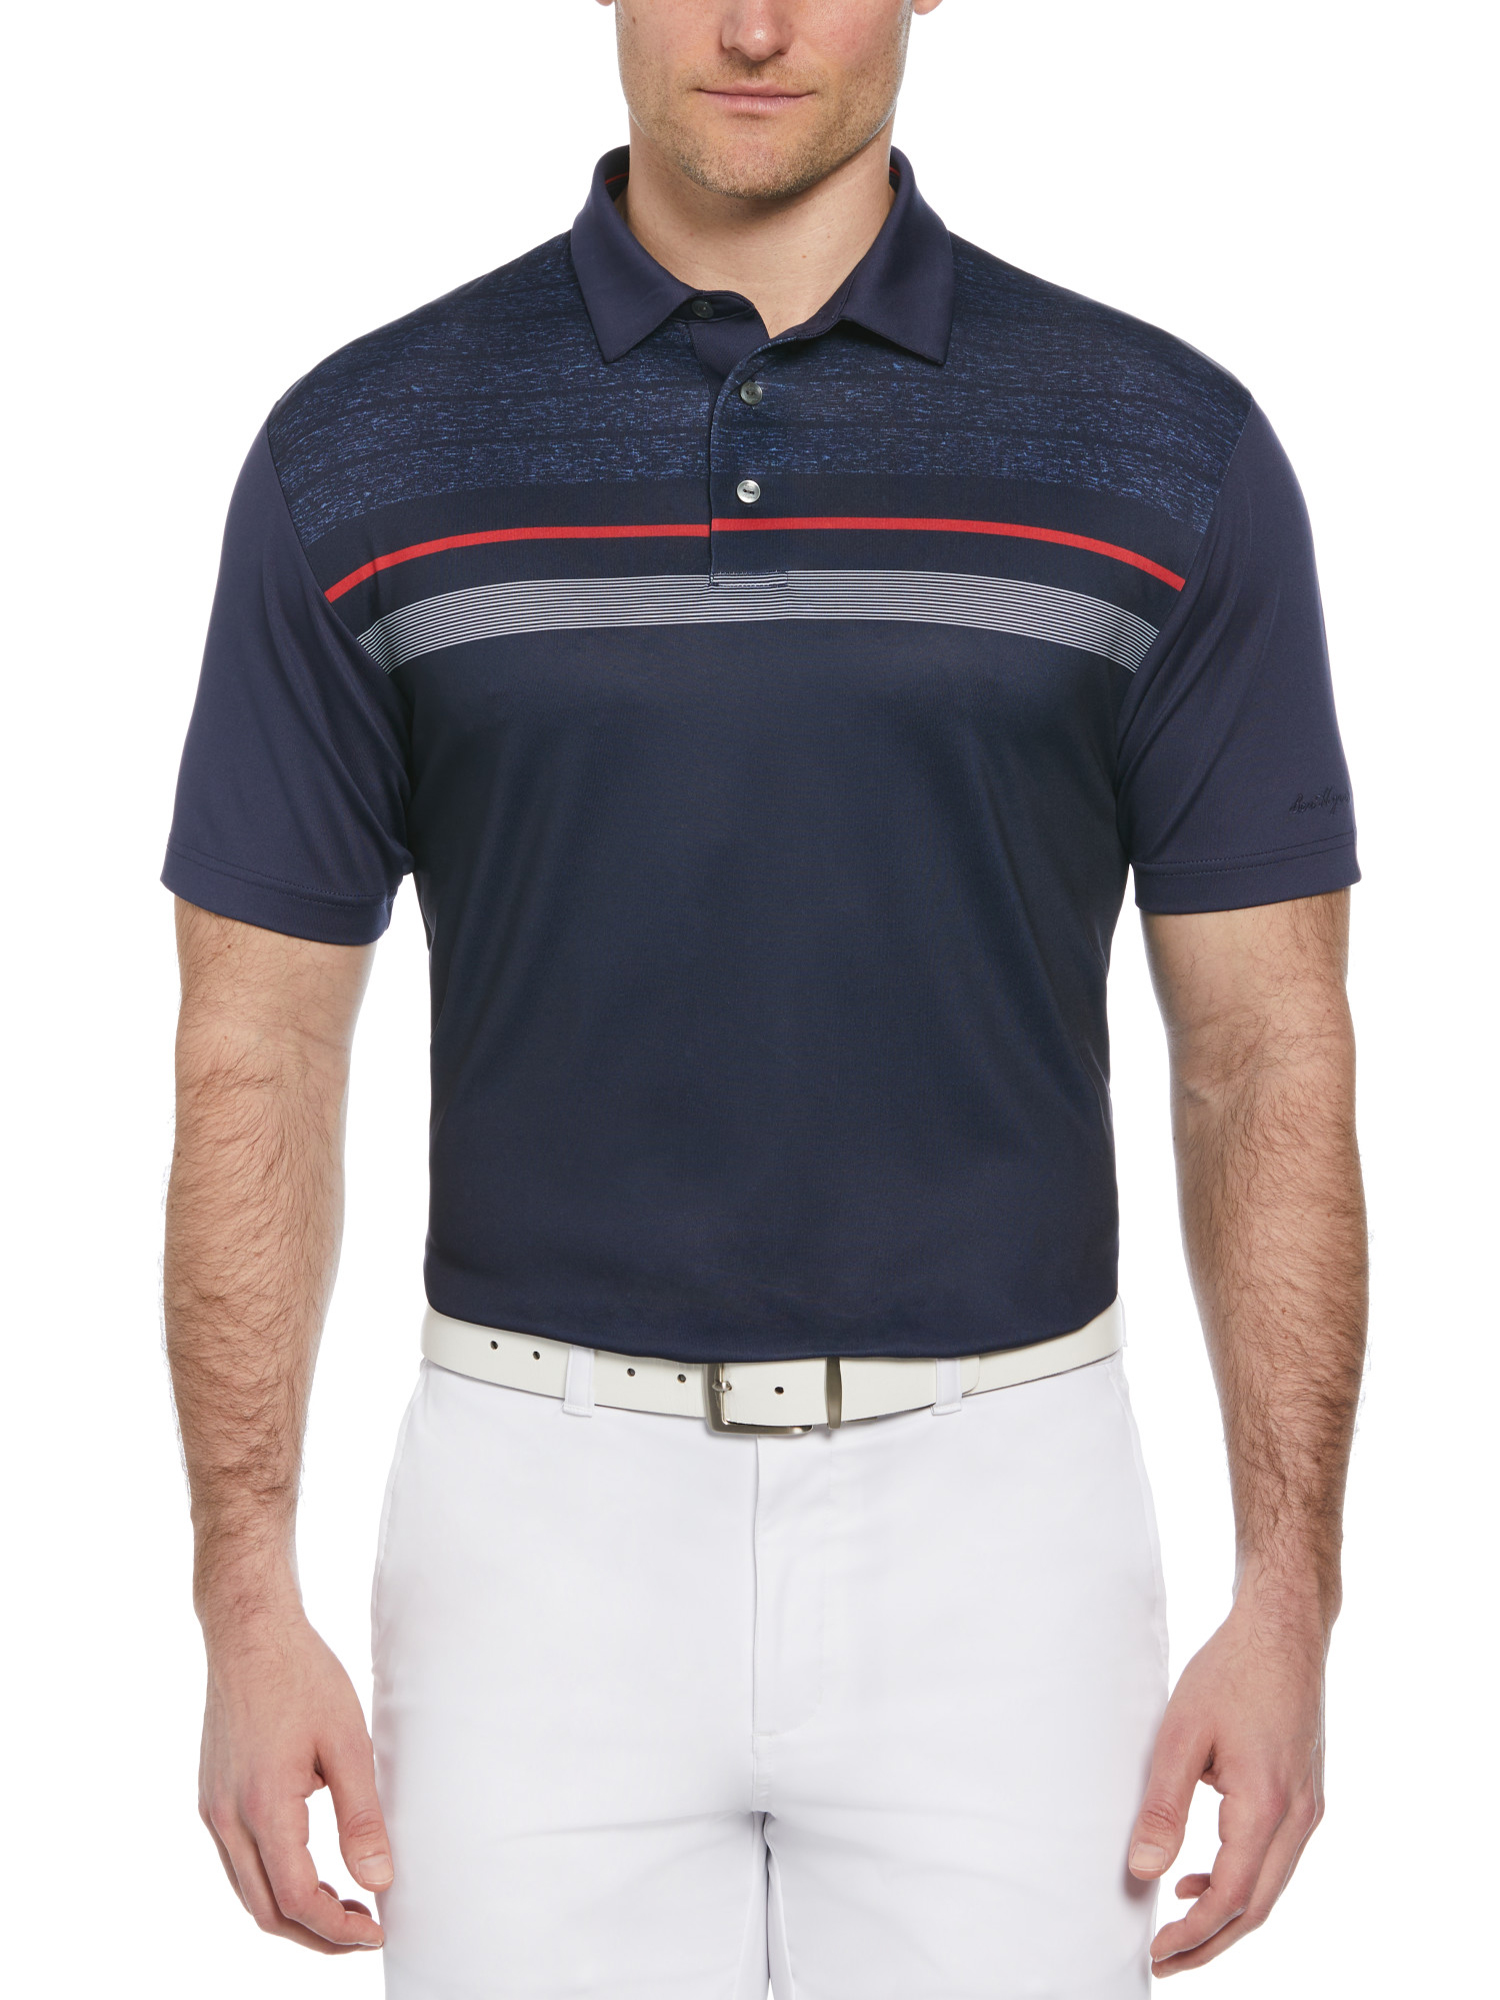 Ben Hogan Men's and Big Men's Textured Color Block Chest Print Golf Polo Shirt, up to Size 5X